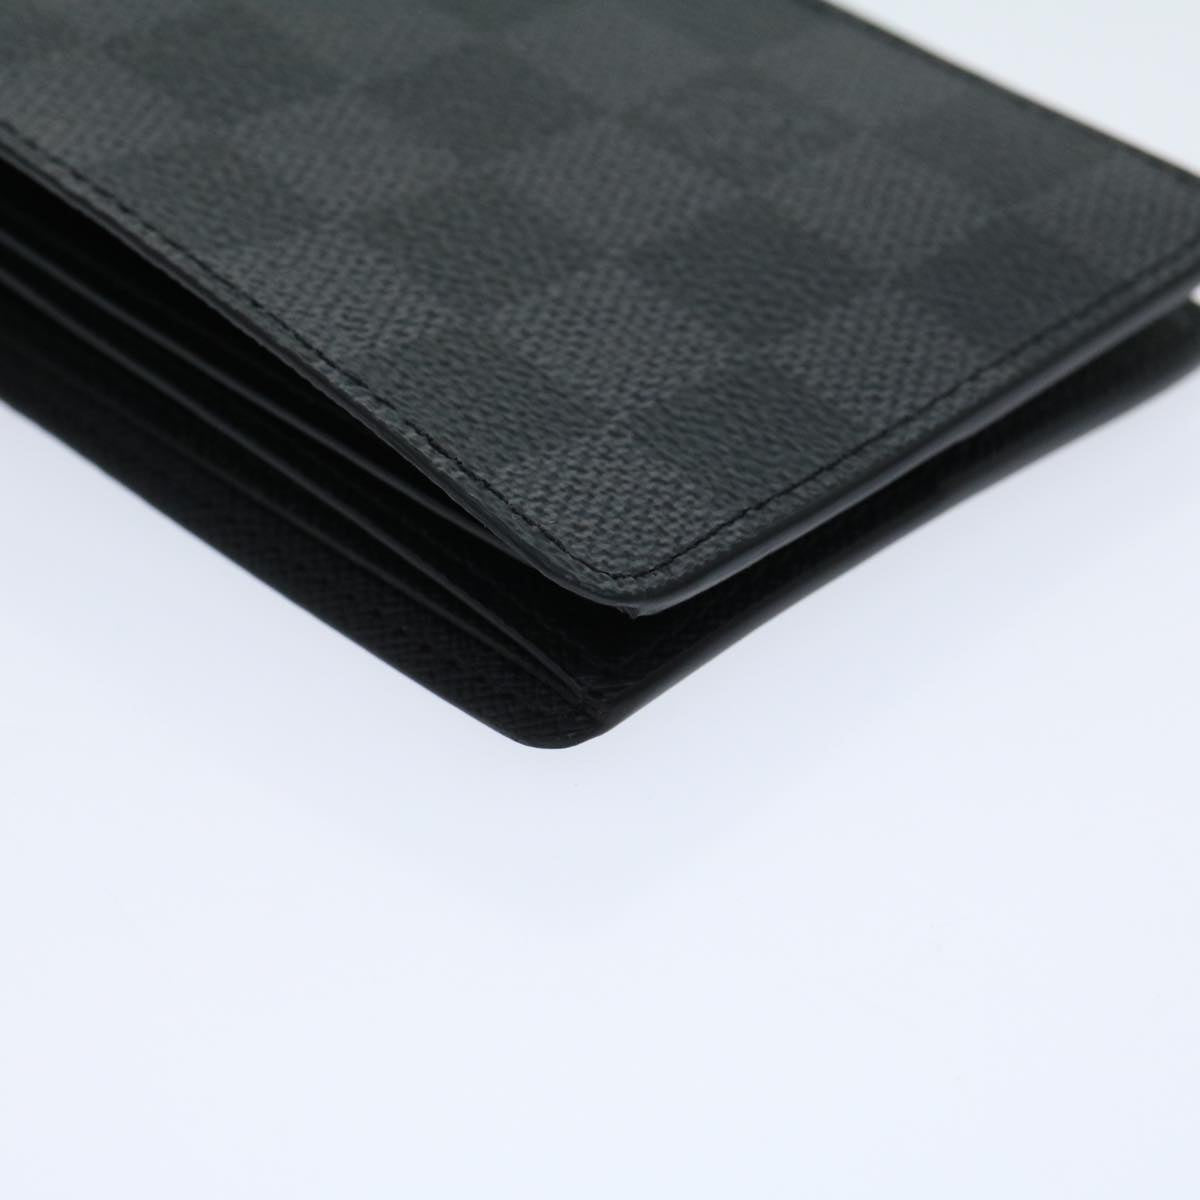 Louis Vuitton Men's Wallet N63261 Damier Graphite 187005427